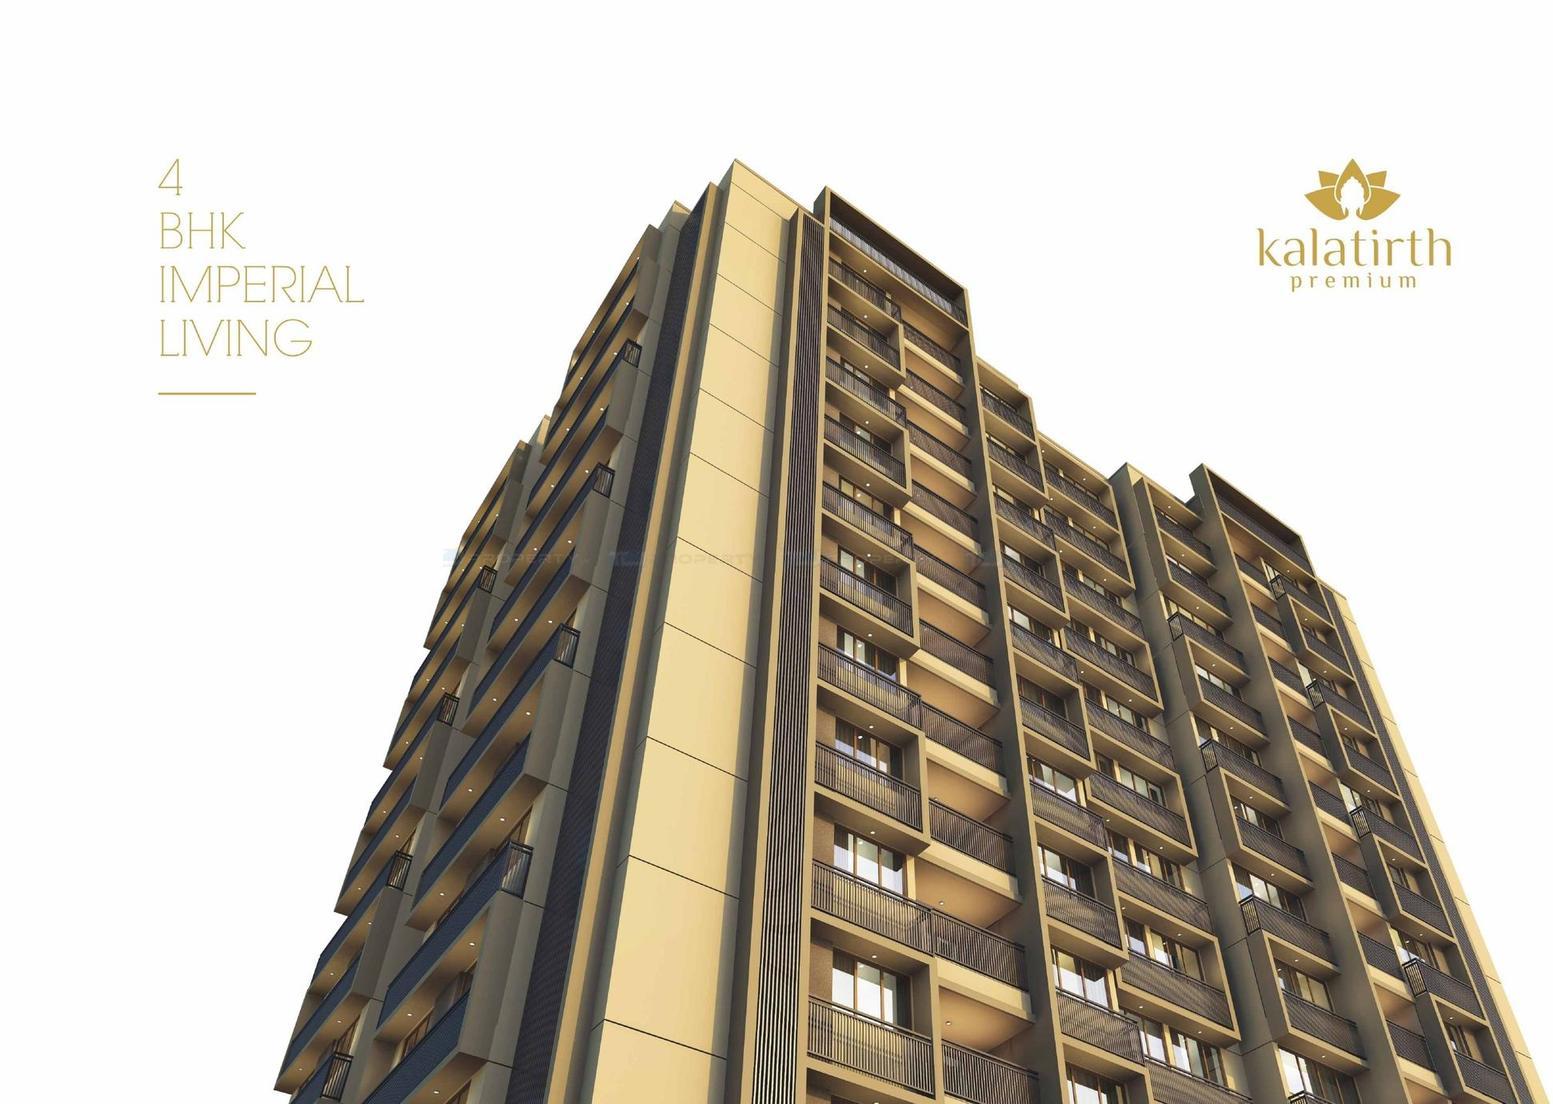 Kalatirth Premium Image